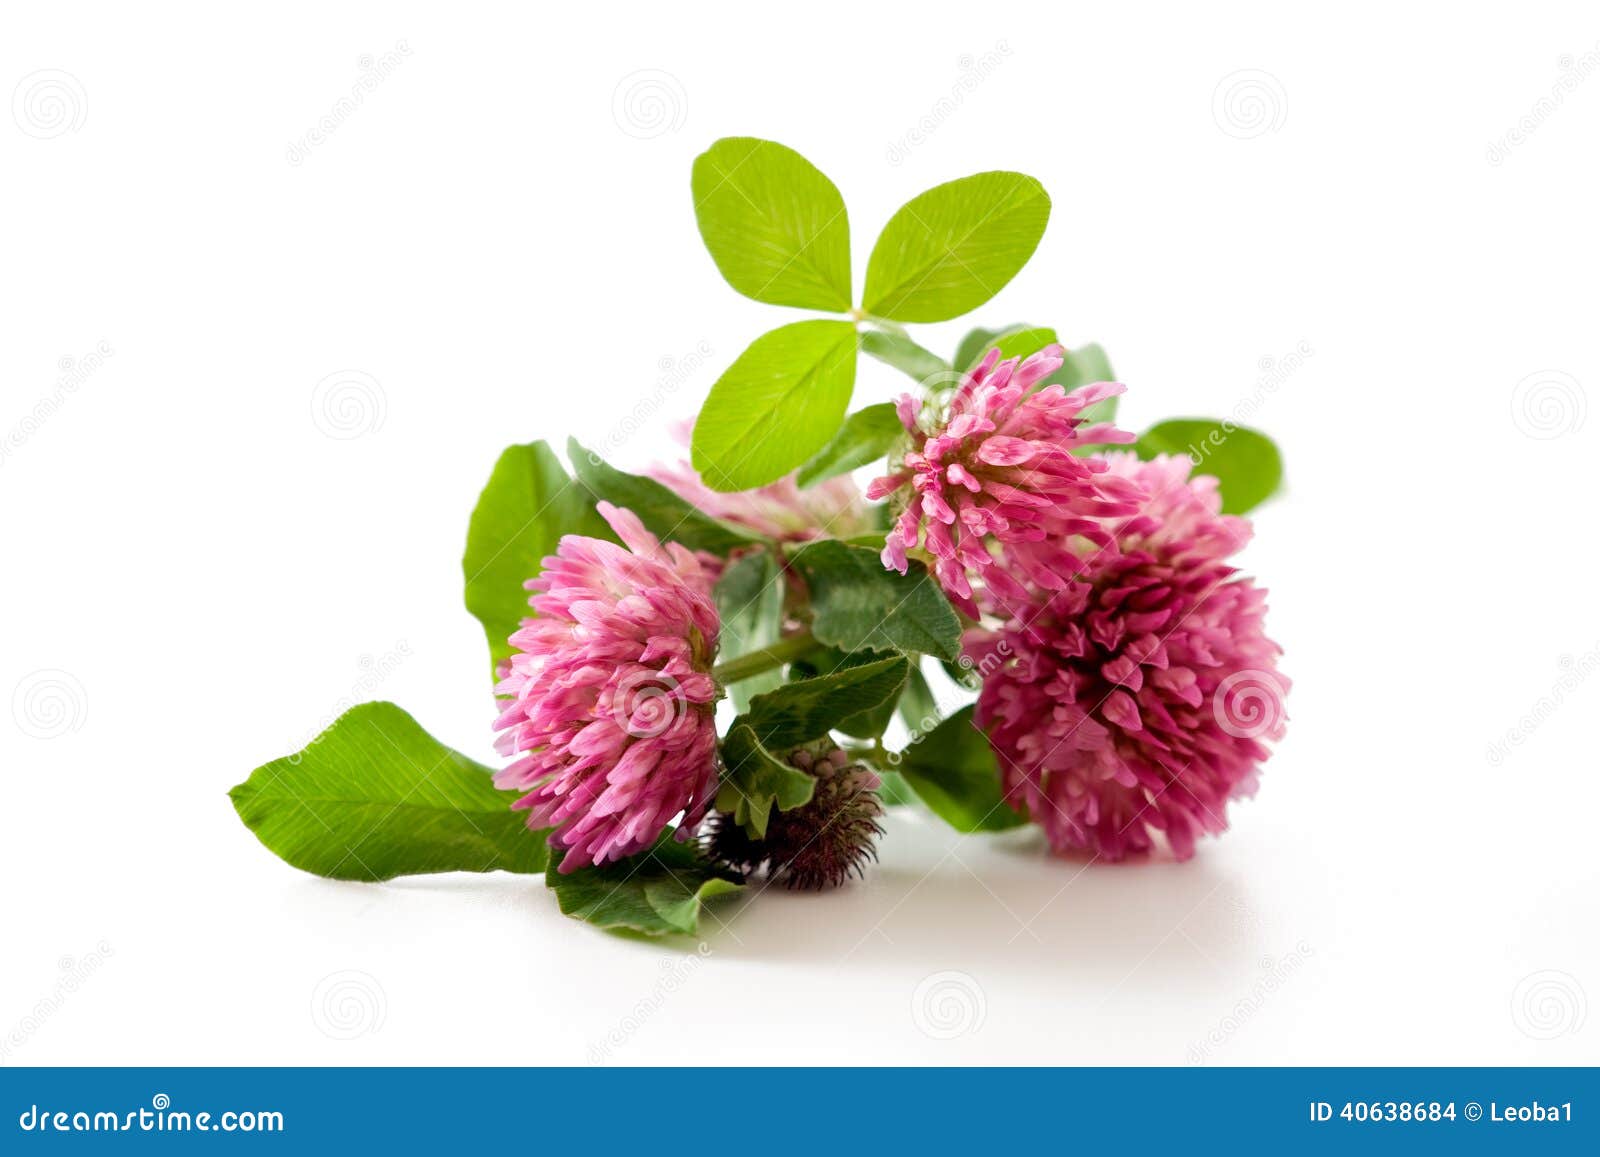 clover, red clover medicinal plant 